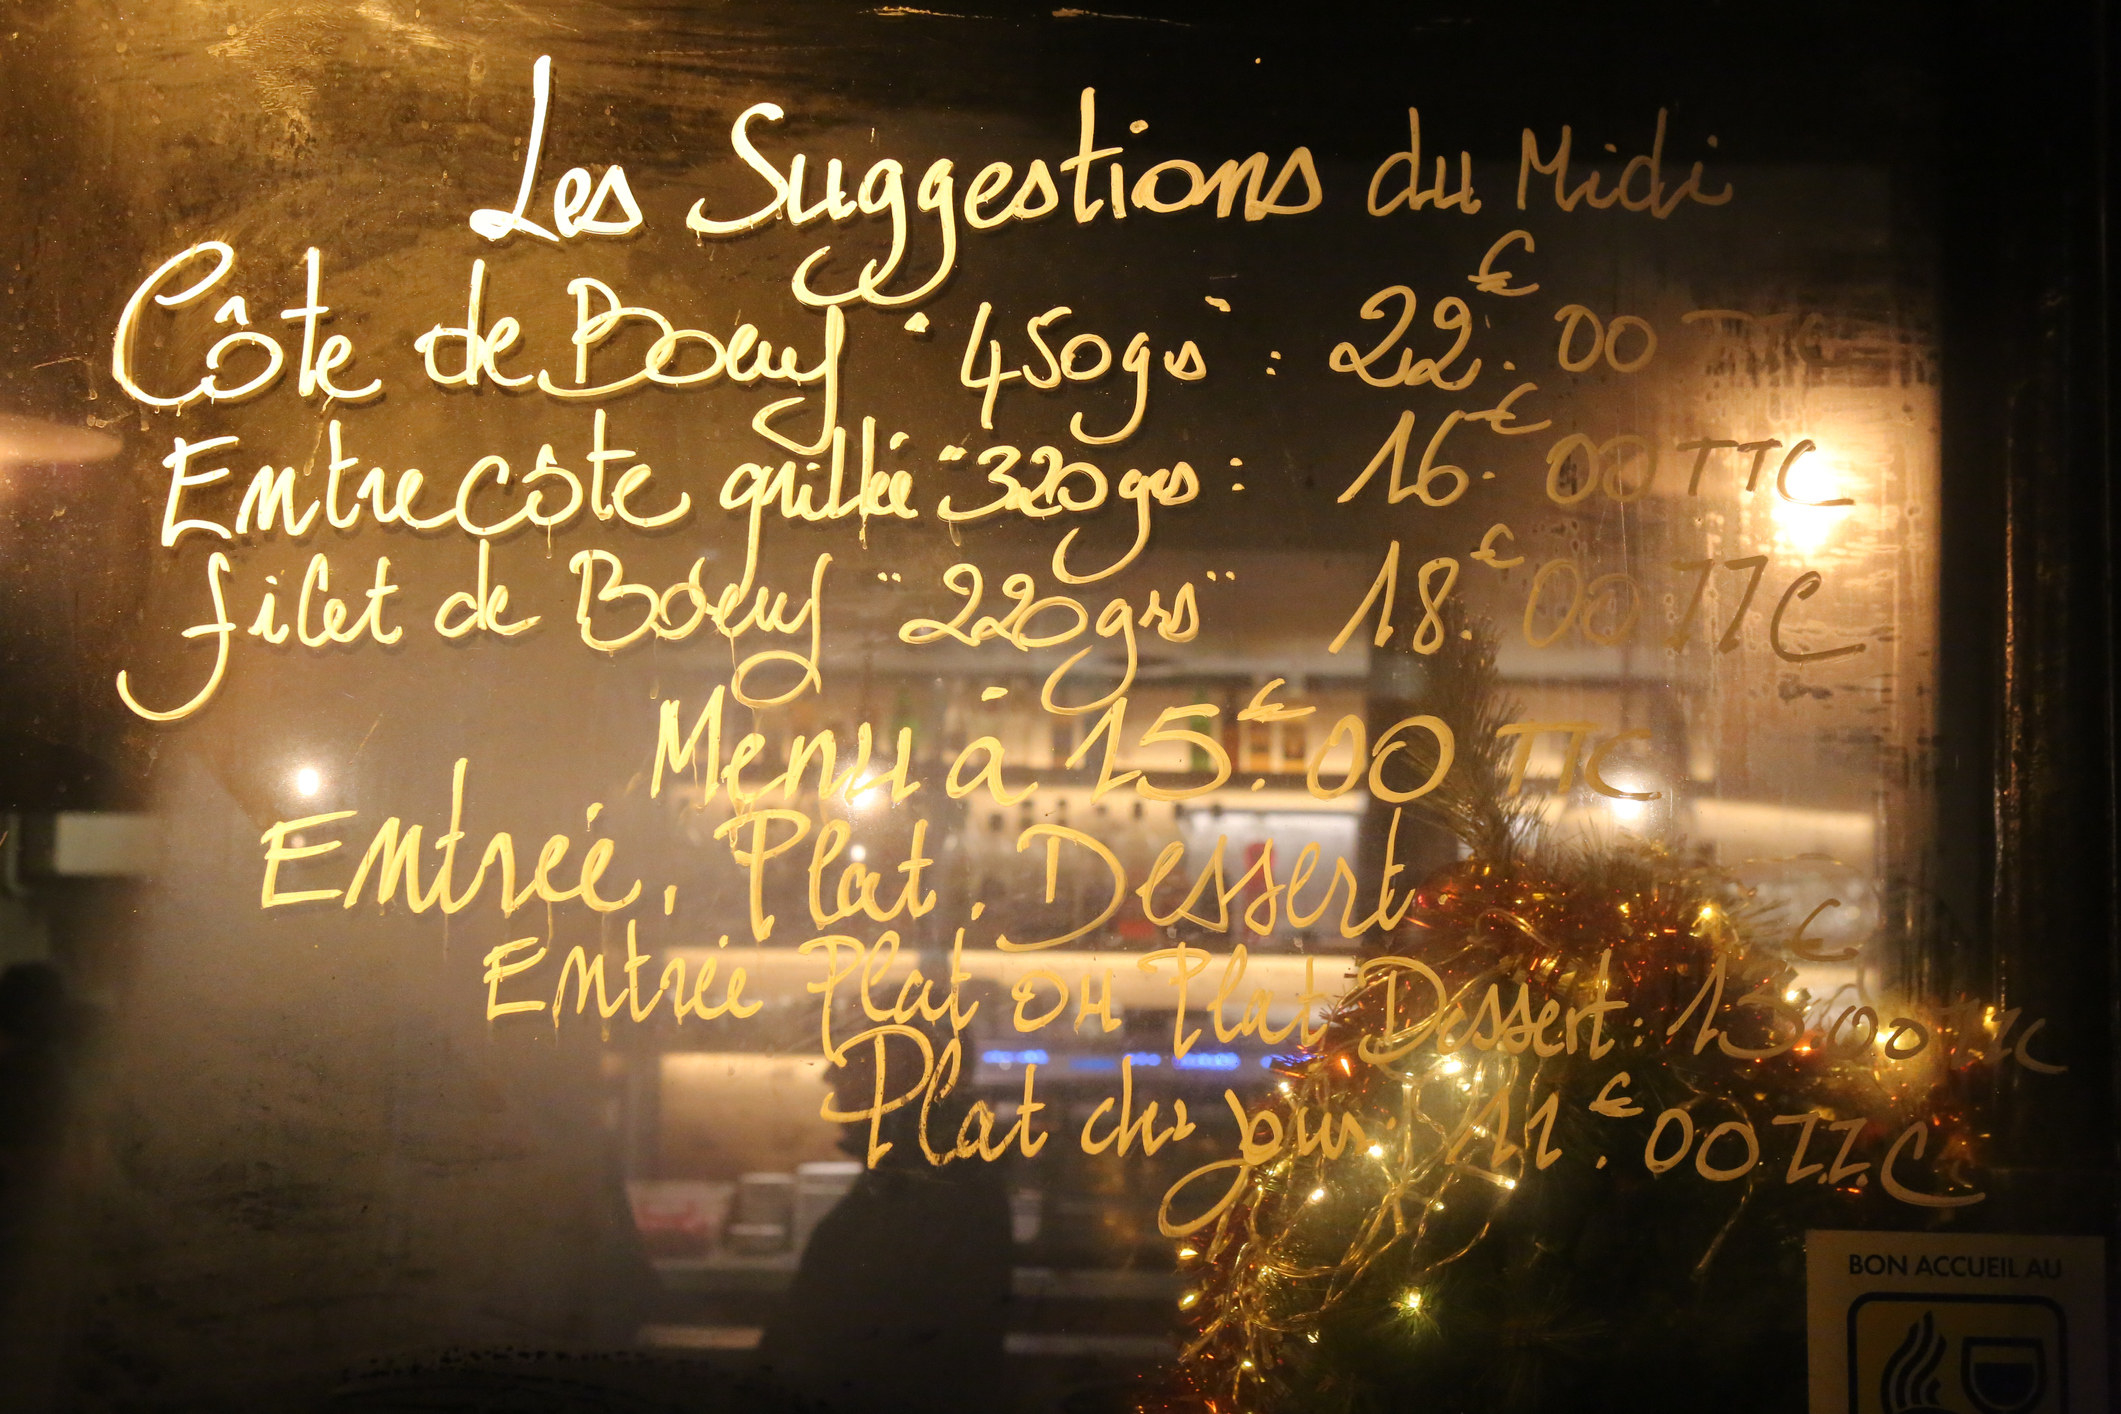 A French menu written on a board.